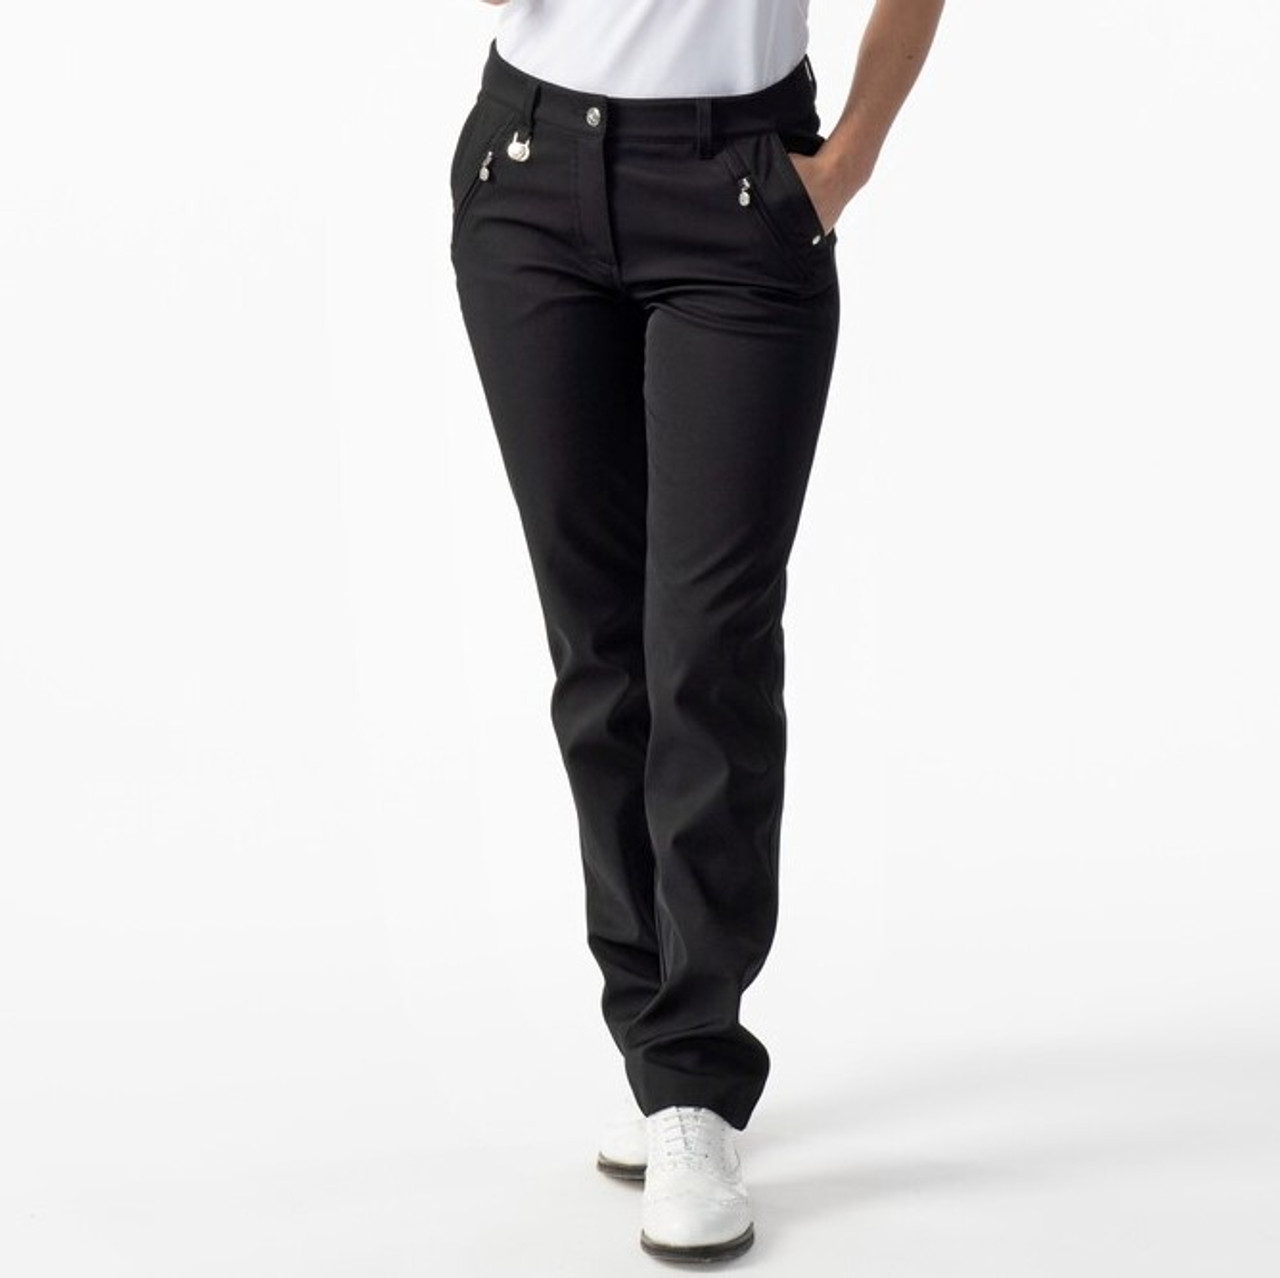 $199 Capsule 121 Women's Black The Iota Stretch Pants Plus Size 1X